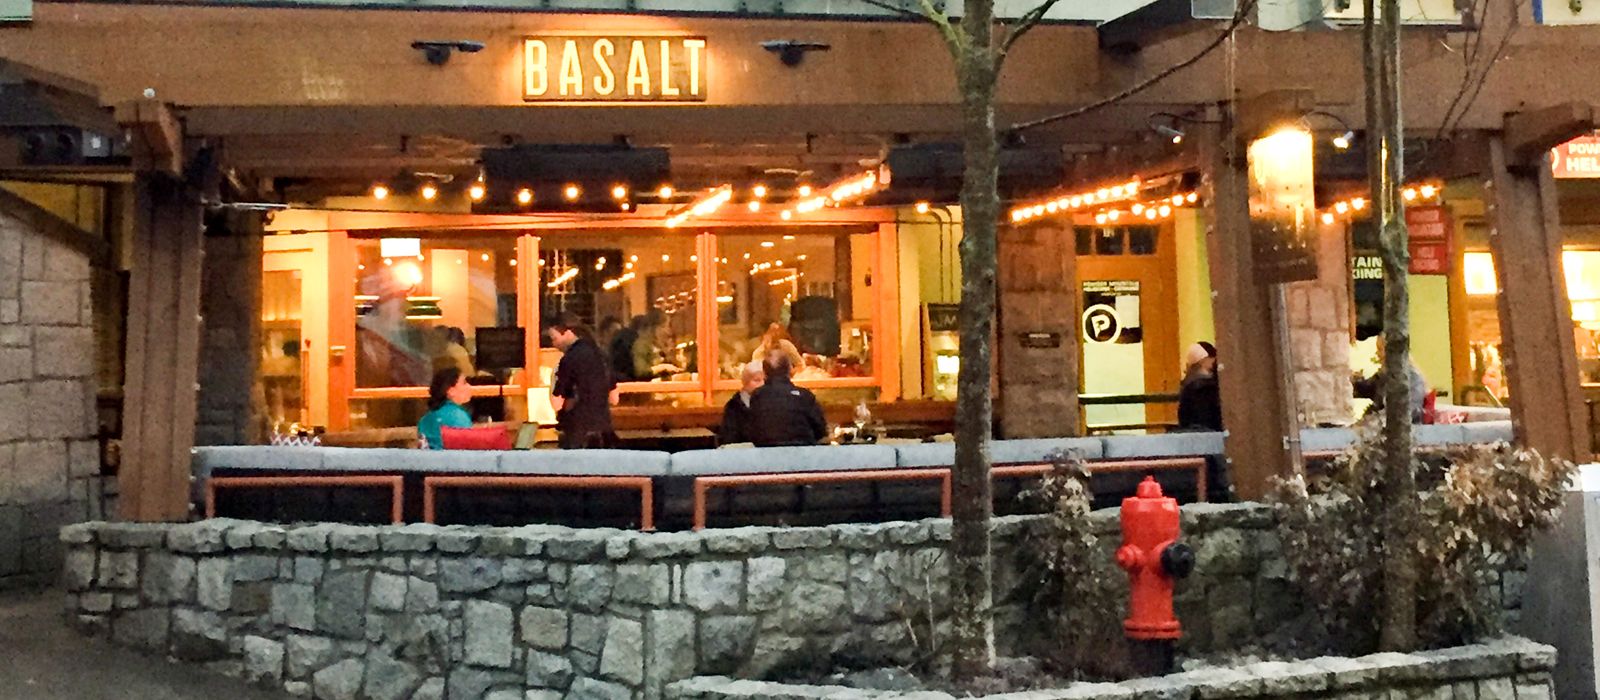 Das Basalt Restaurant in Whistler, Kanada